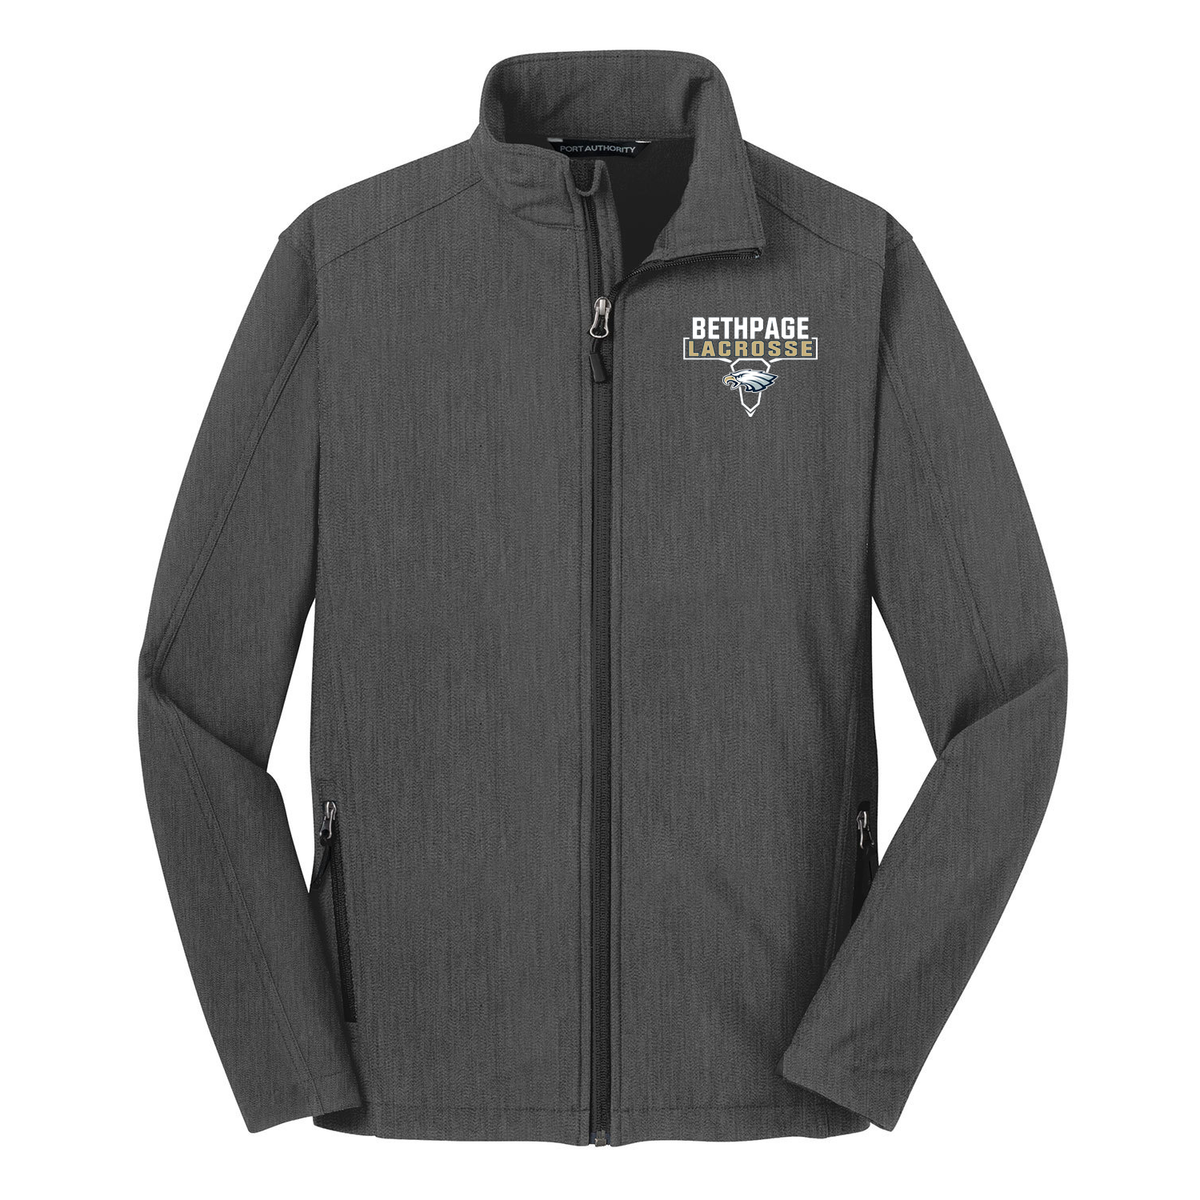 Bethpage Lacrosse Charcoal Soft Shell Jacket